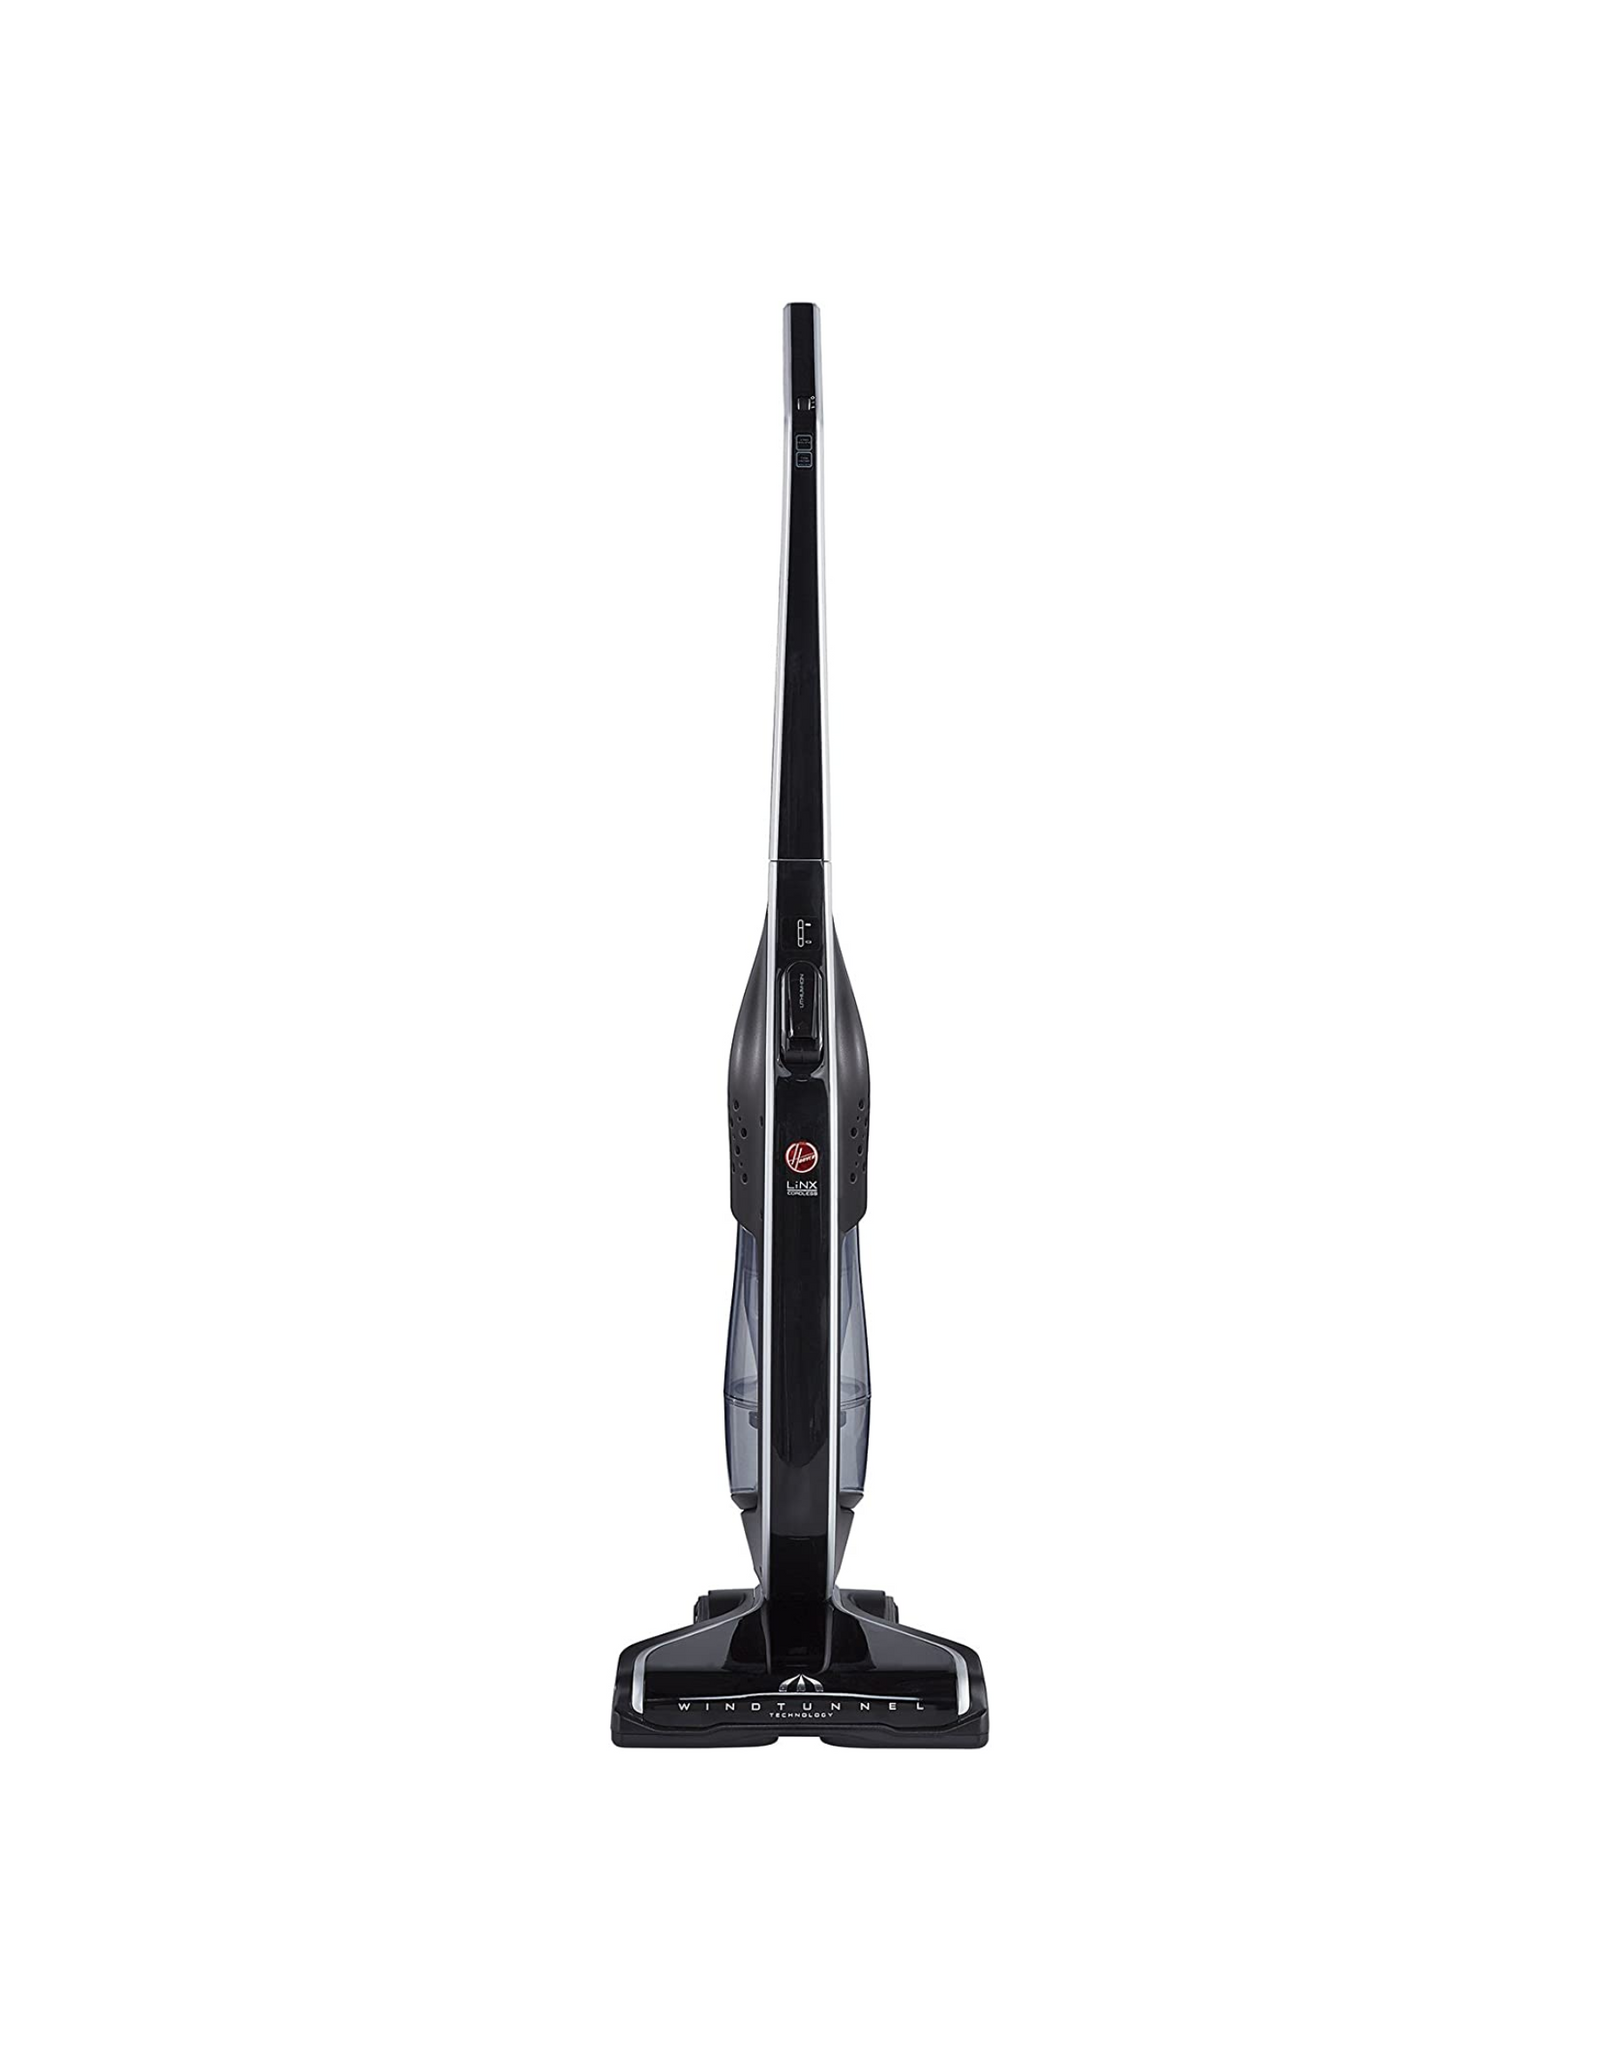 Hoover Linx Signature Stick Cordless Vacuum Cleaner BH50020PC, Lightweight, Black